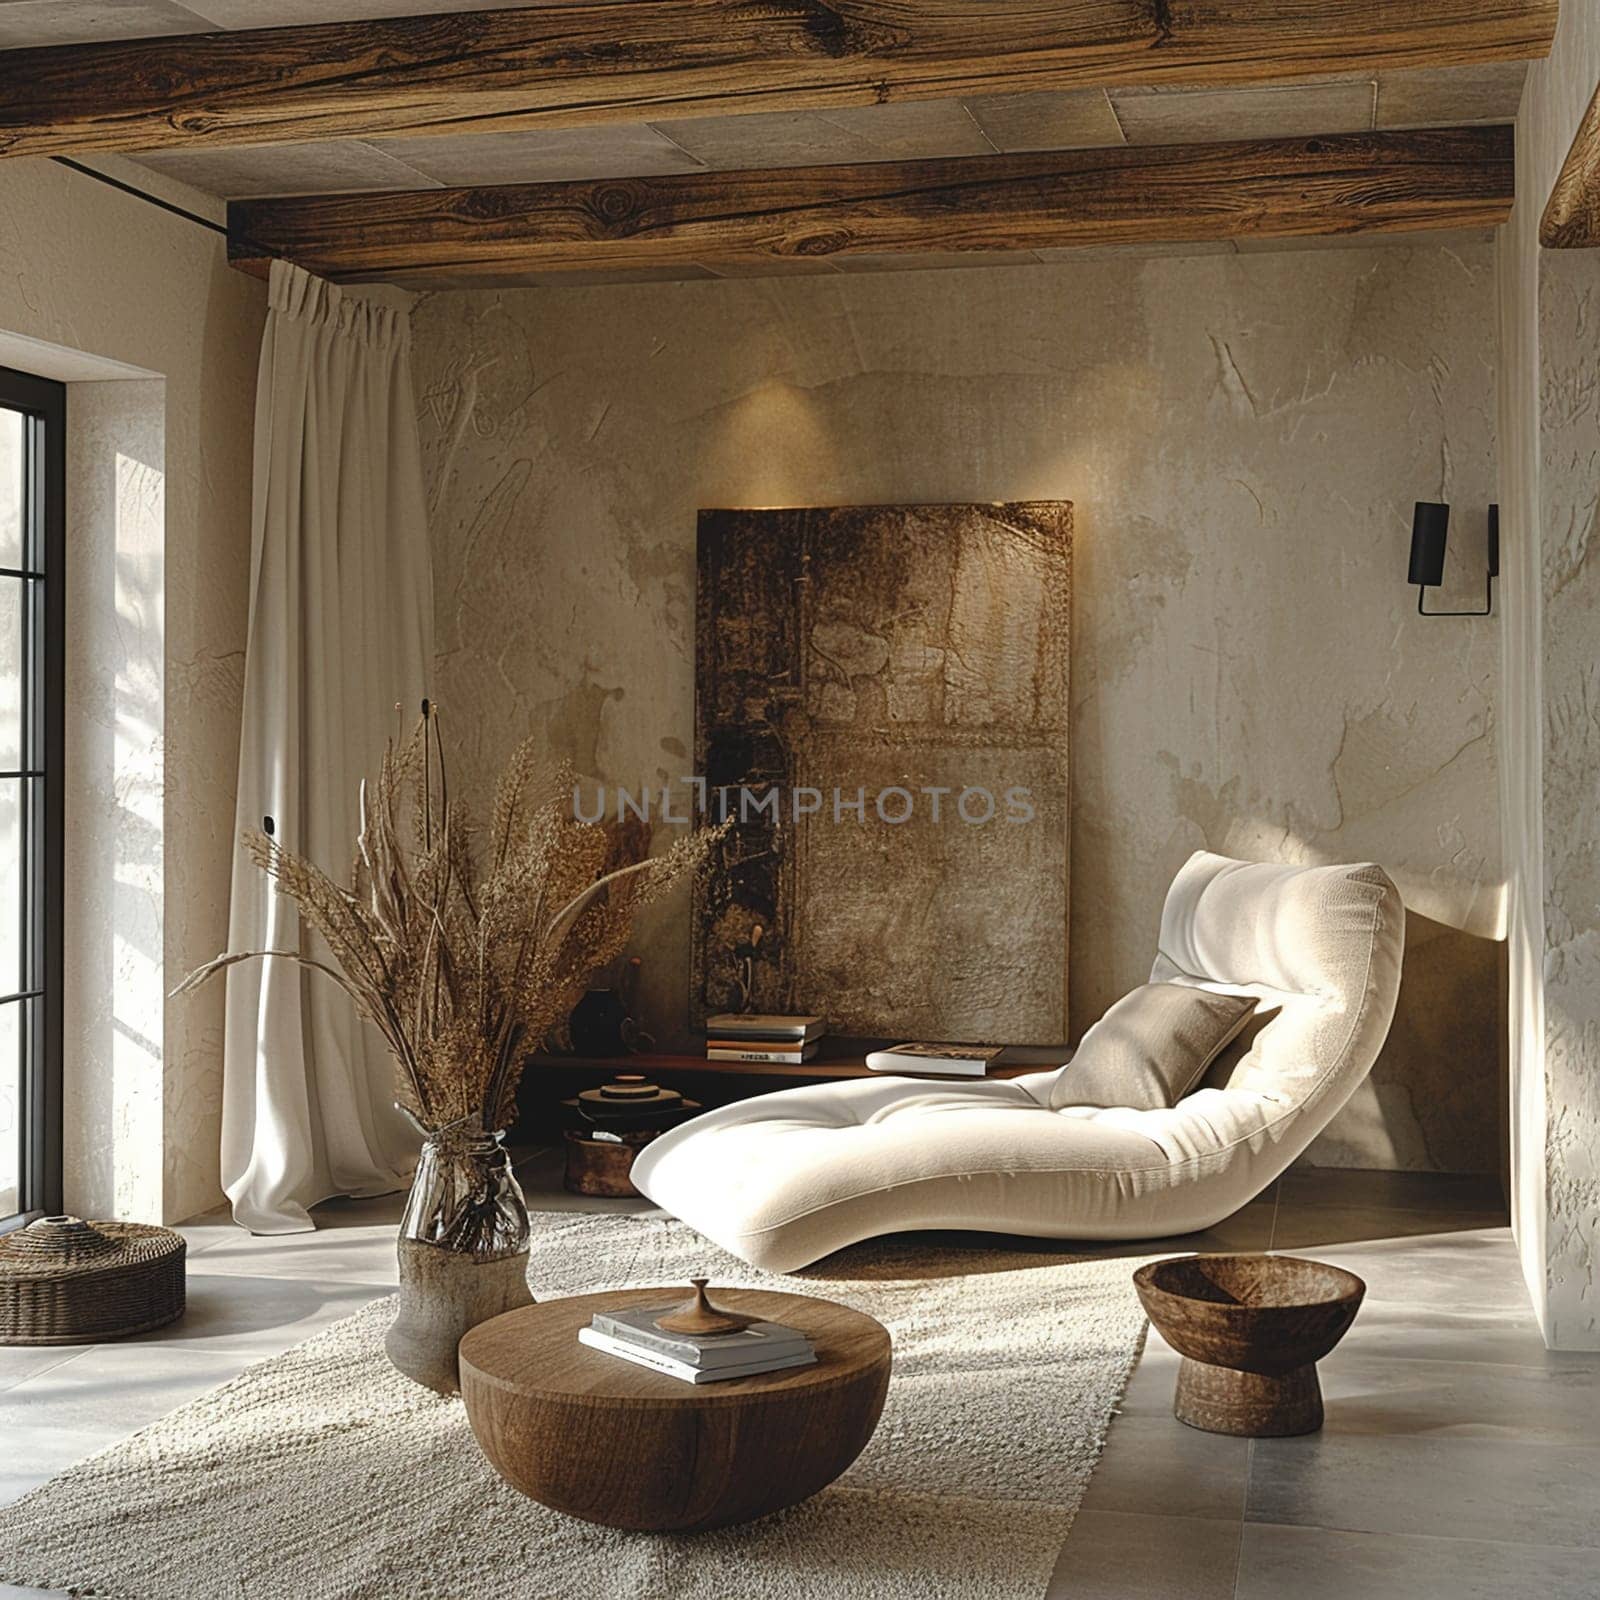 Minimalist Wooden Stand Amidst a Scandinavian Interior by Benzoix